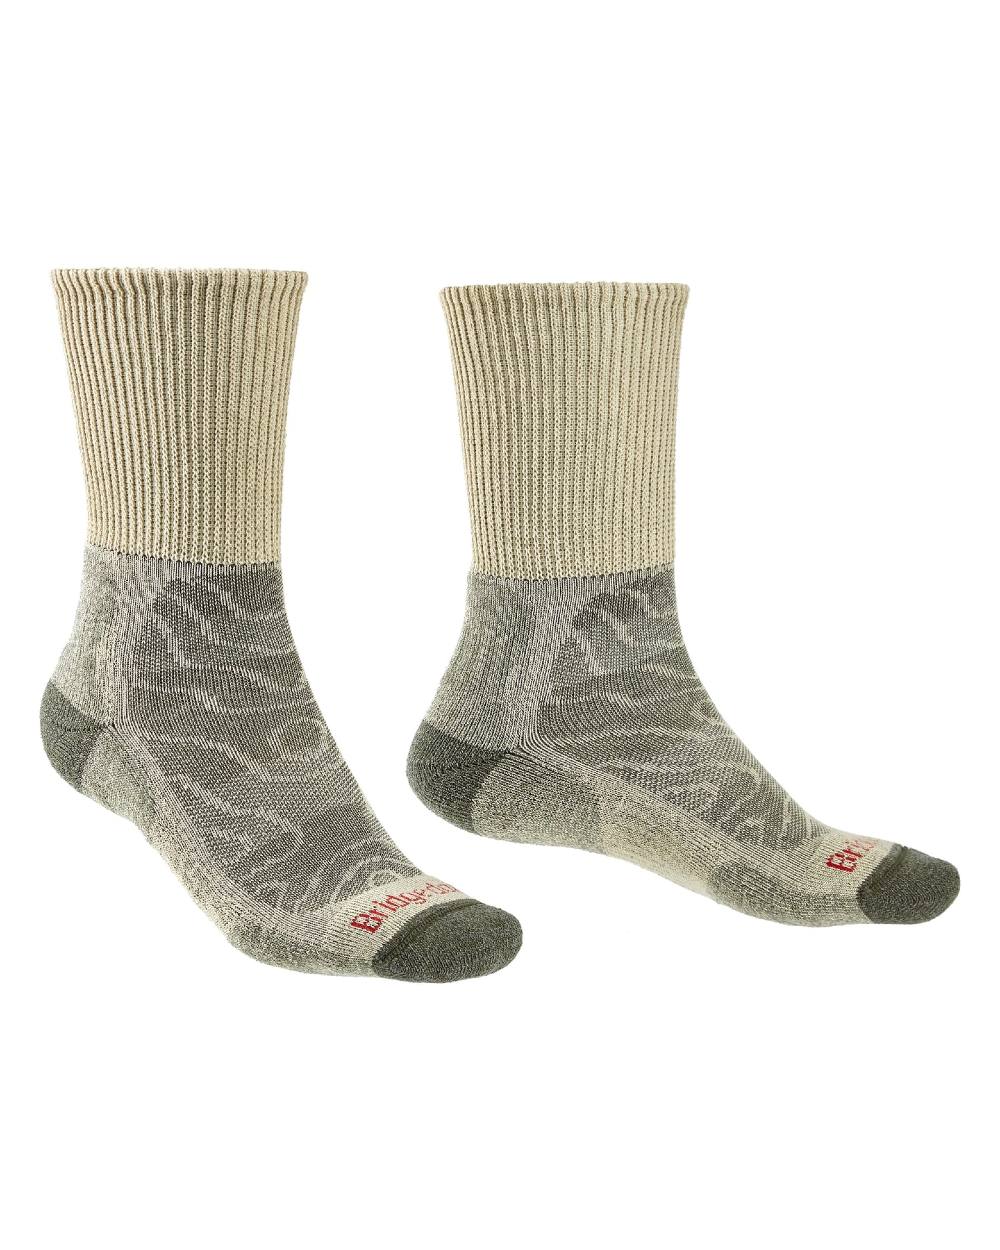 Natural coloured Bridgedale Mens Lightweight Merino Comfort Socks on a white background 